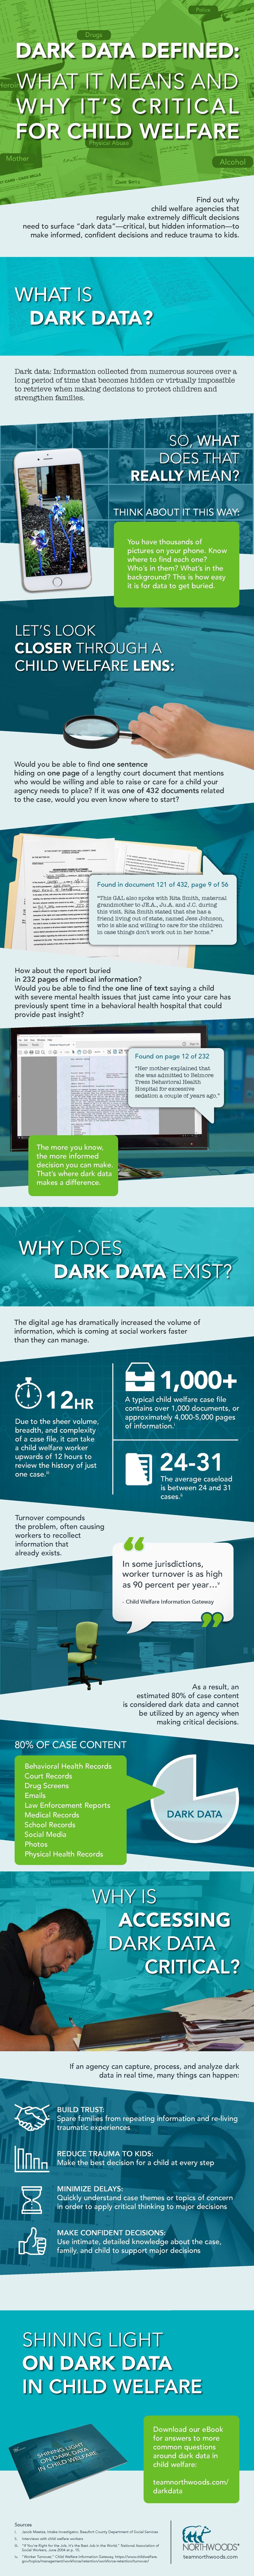 What causes dark data in Child Welfare? [Infographic]